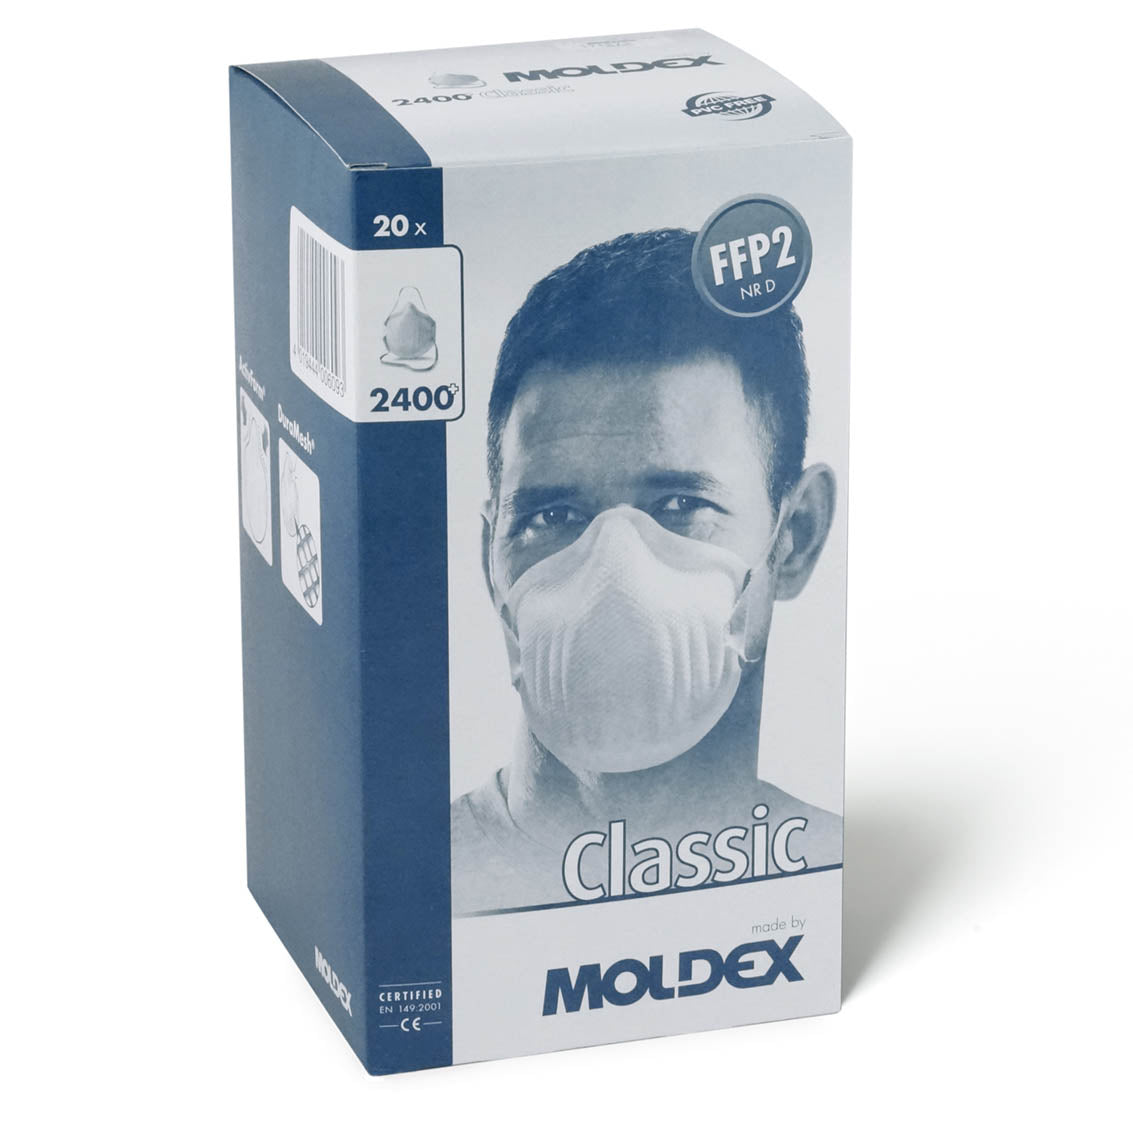 Moldex 2400 Classic FFP2 NR D Mask package